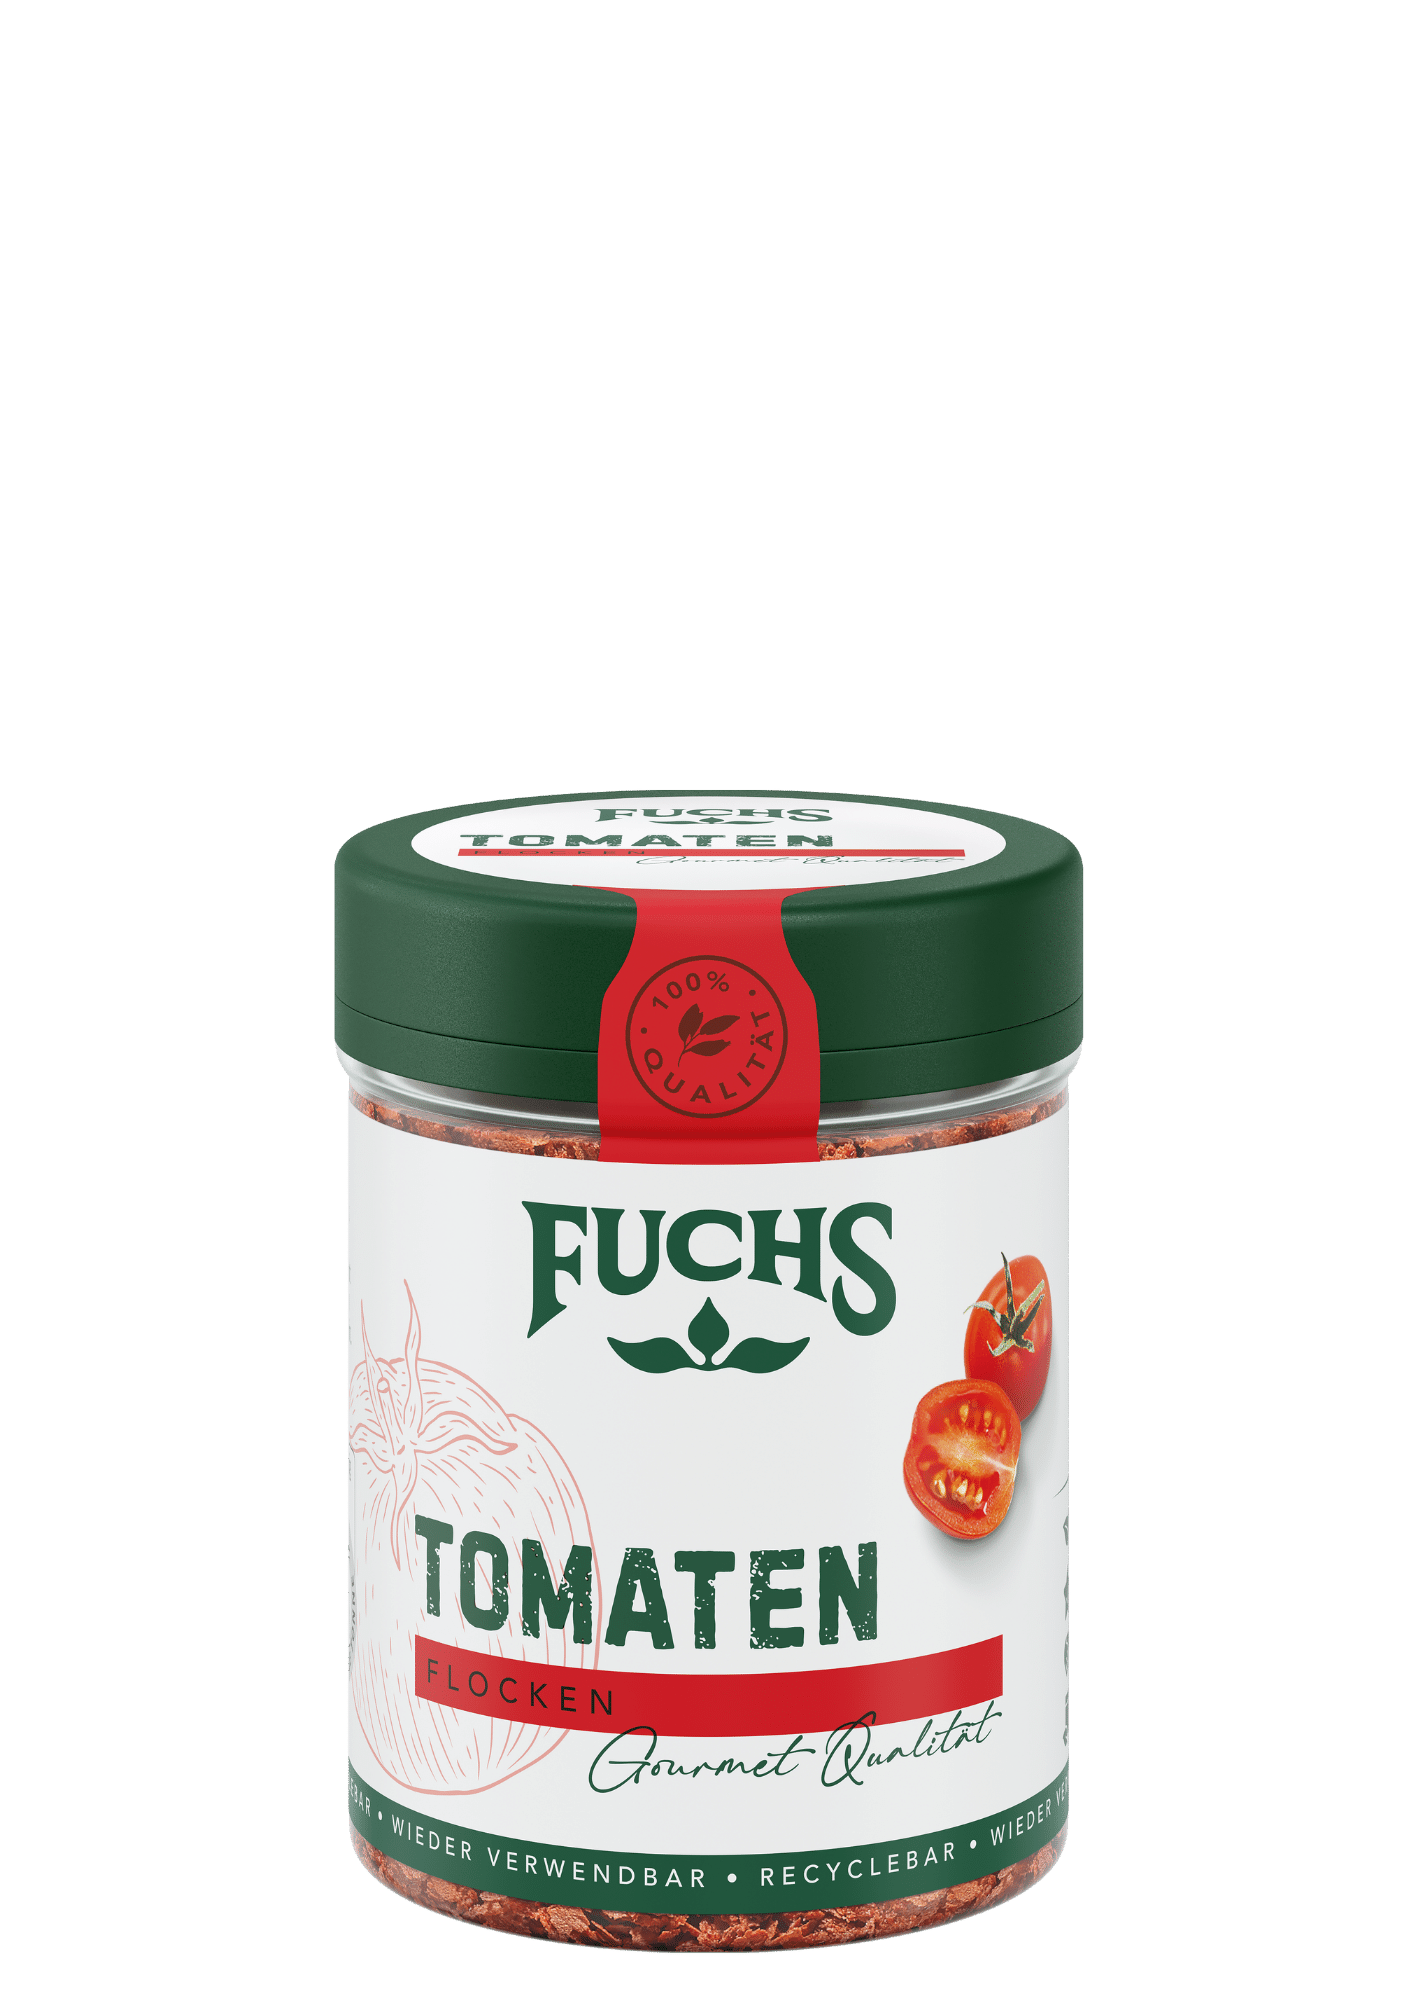 Tomaten Flocken